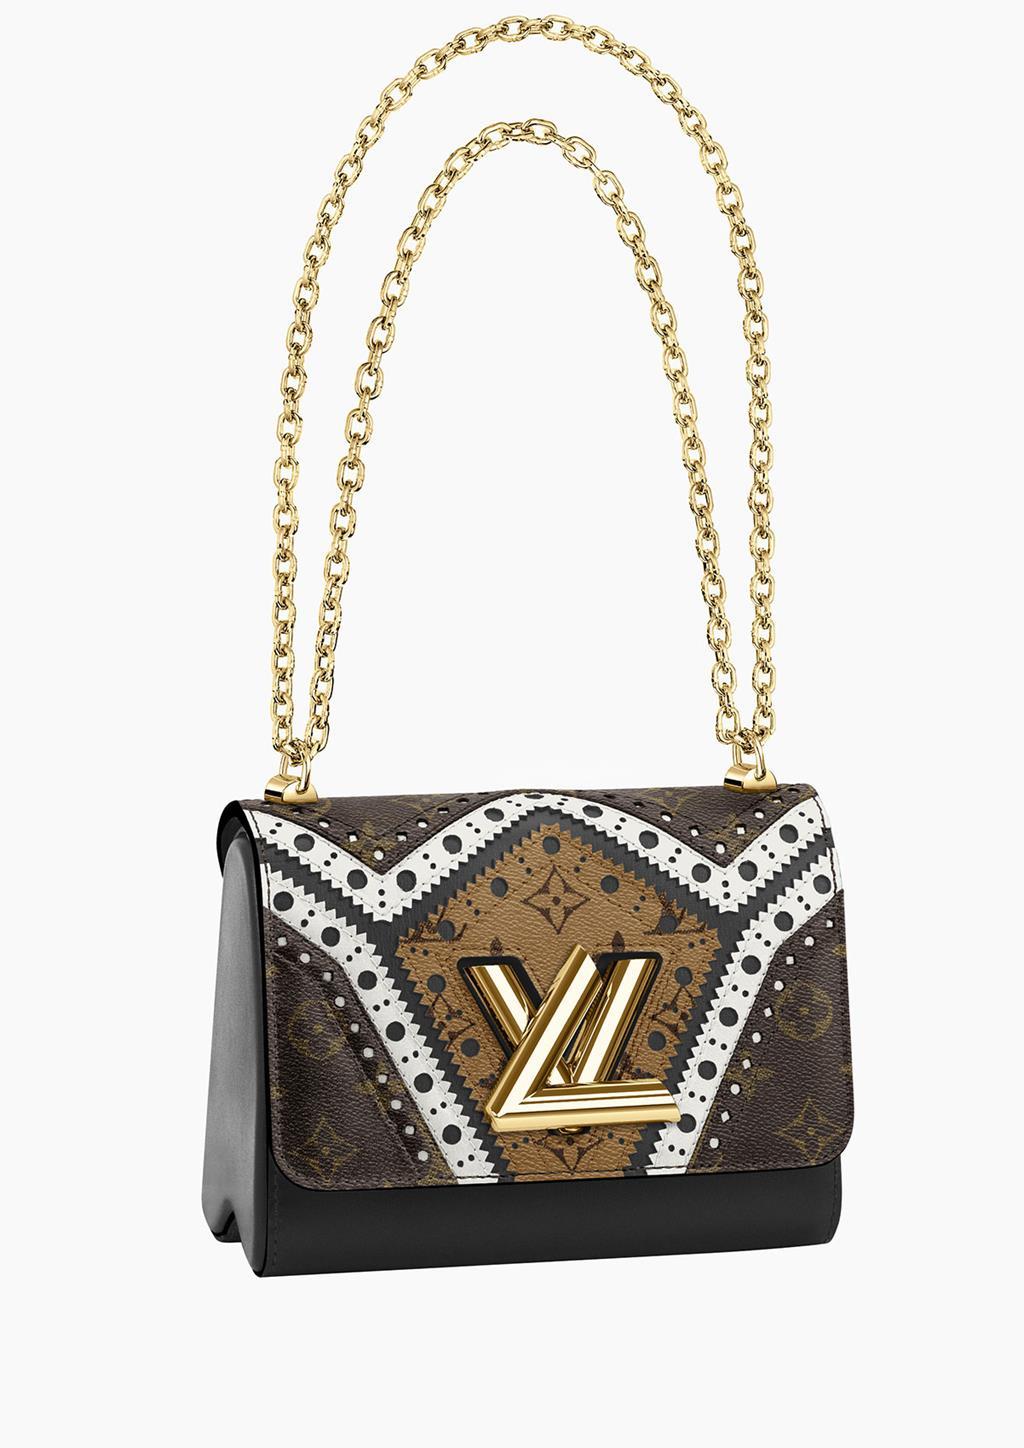 Centurion Announces Louis Vuitton Bag Drawing to Benefit JFC at